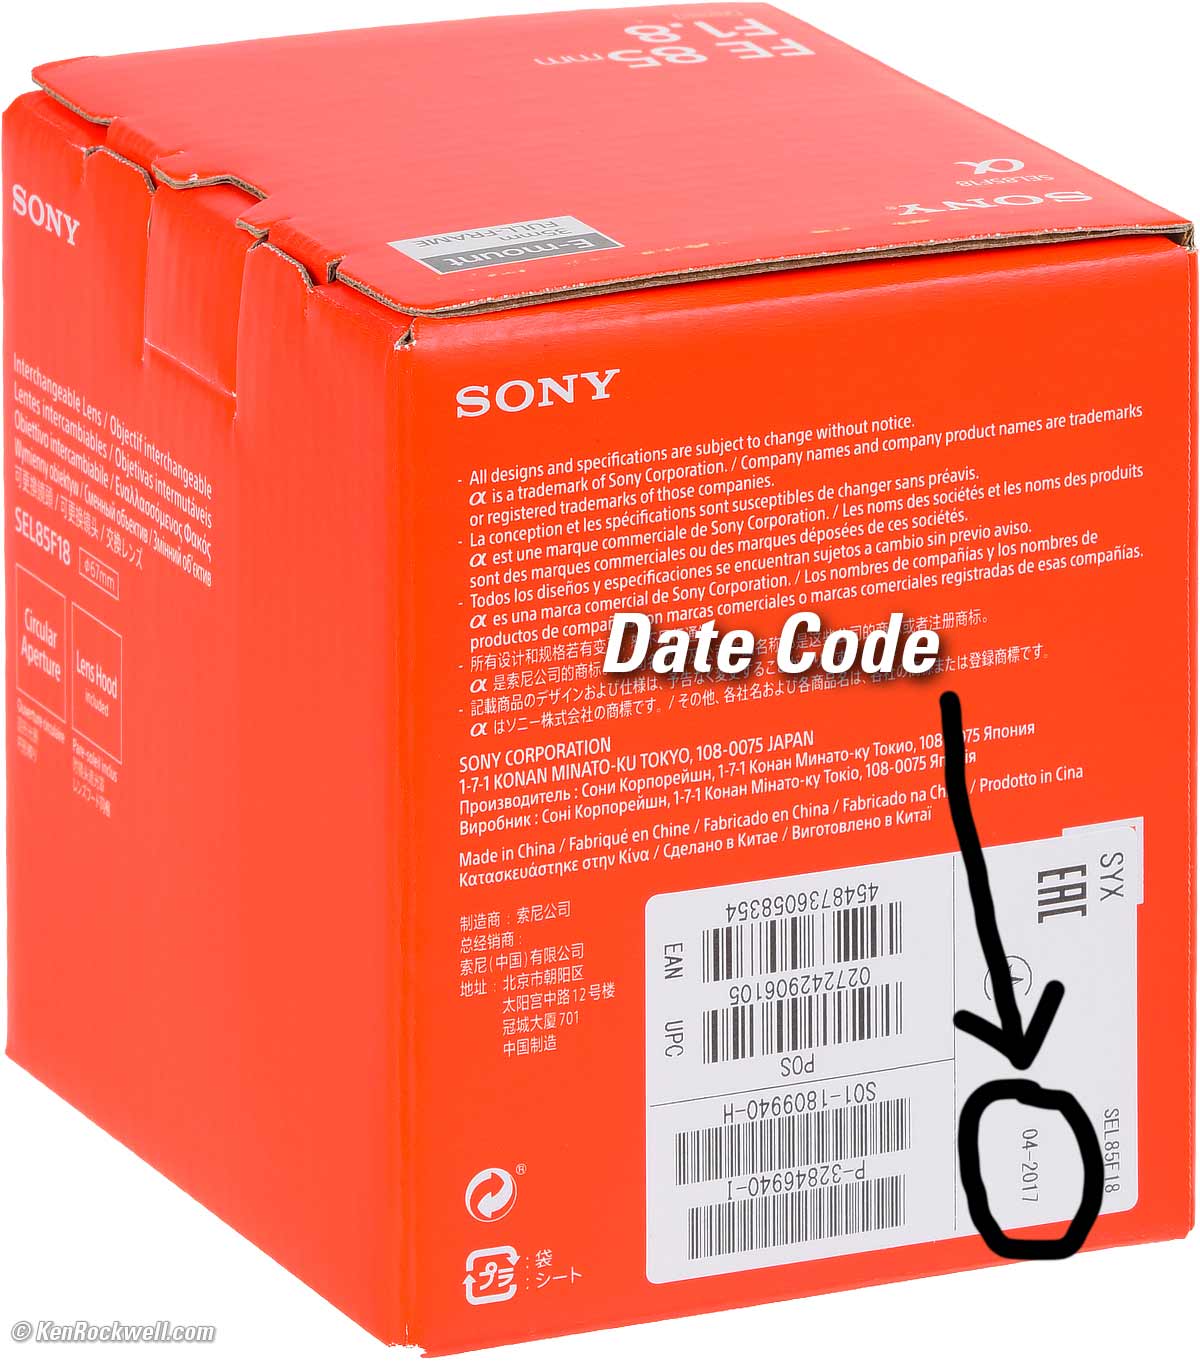 Sony Lens Serial Number